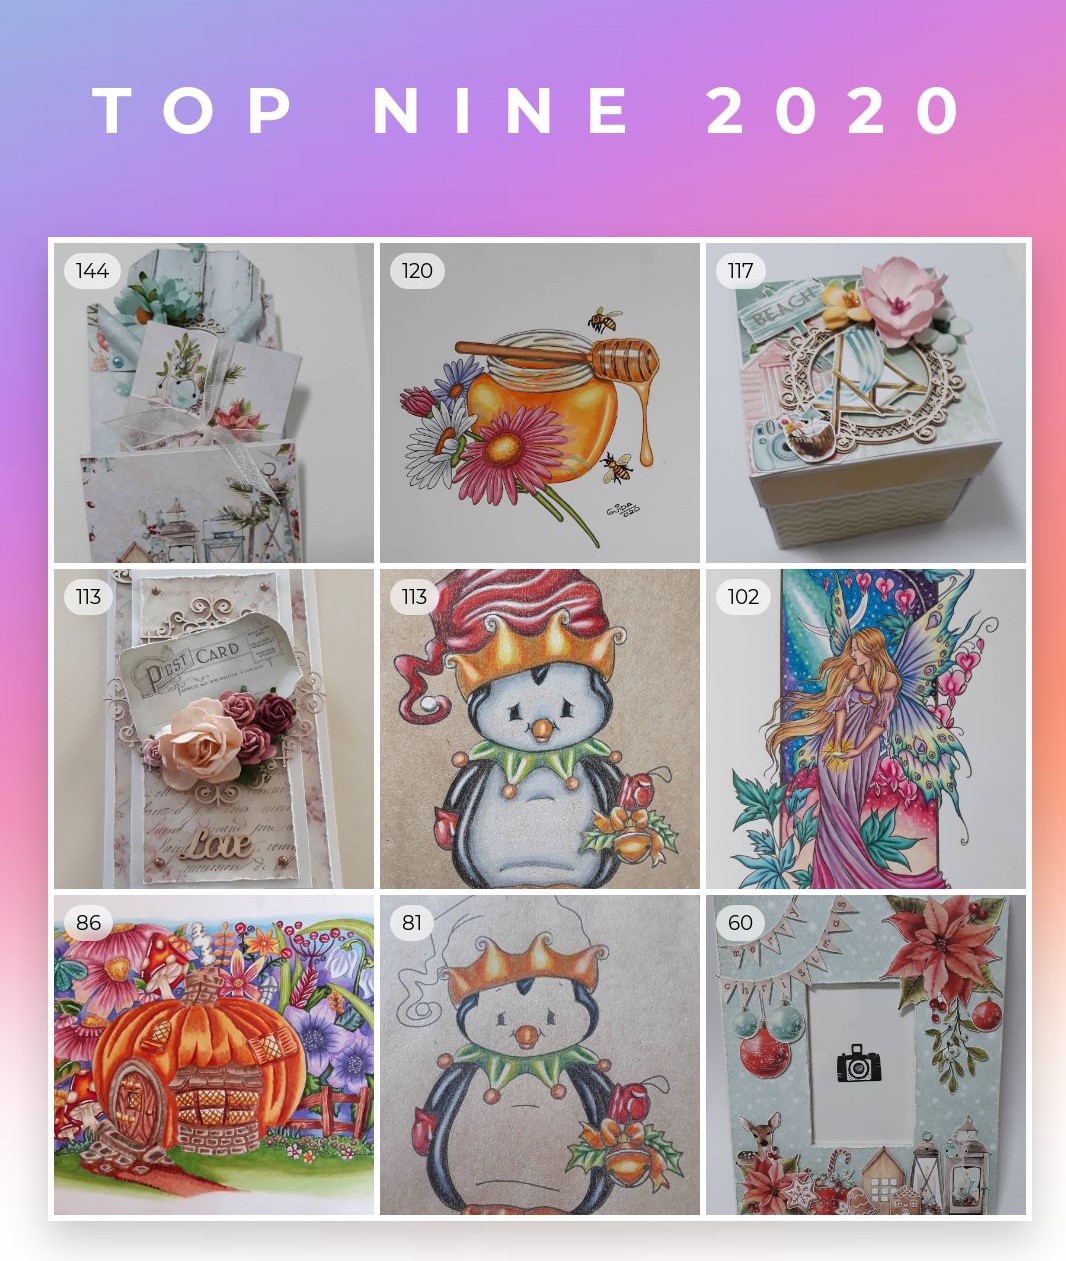 2020 Top Nine on Instagram